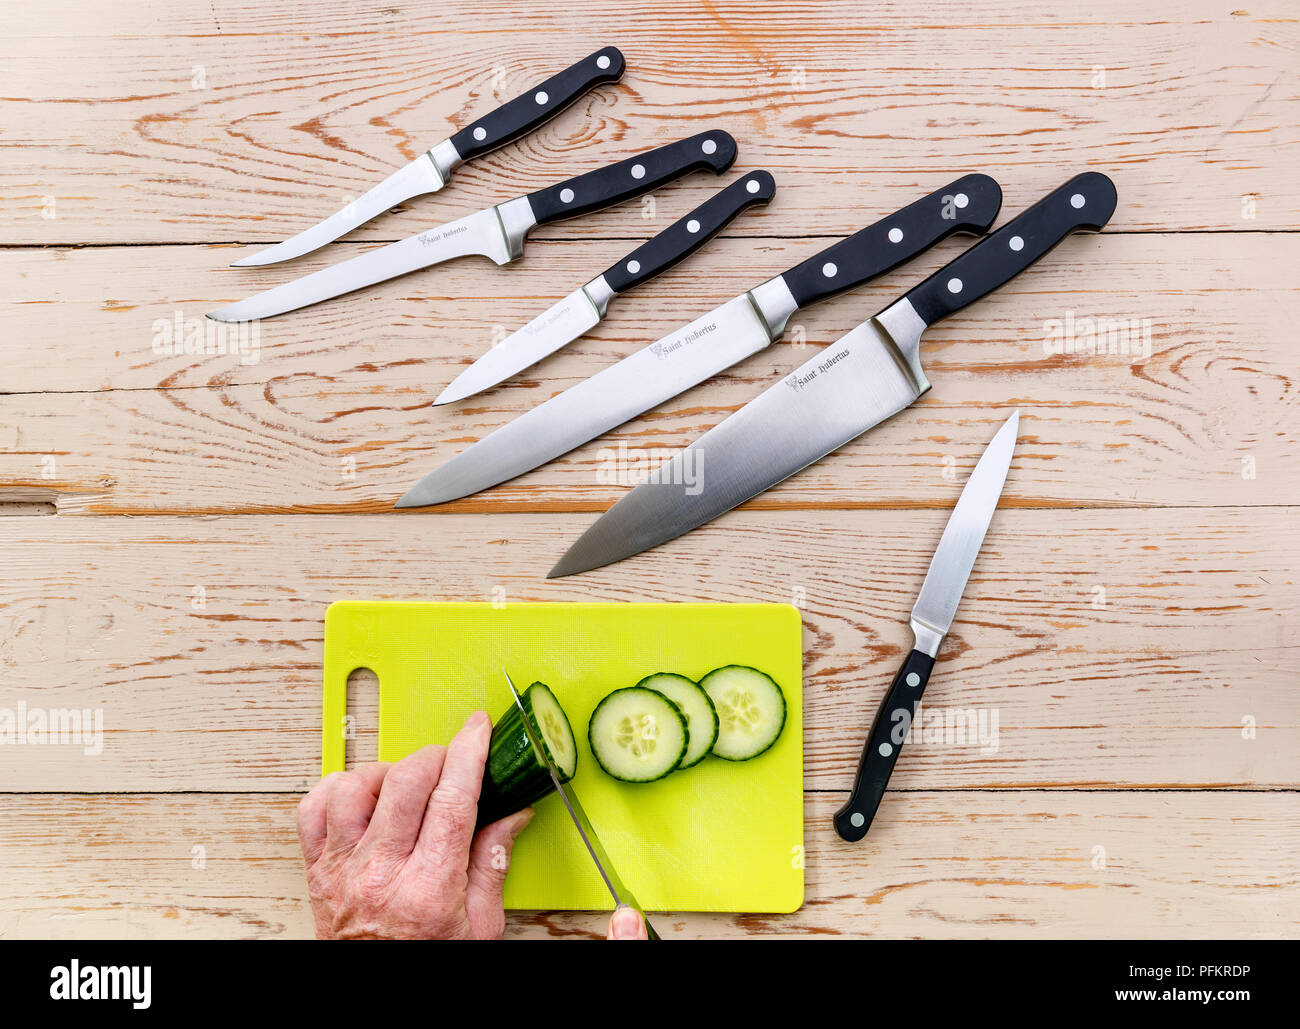 Un surtido de varios cuchillos de cocina sobre un fondo de madera. Foto de stock